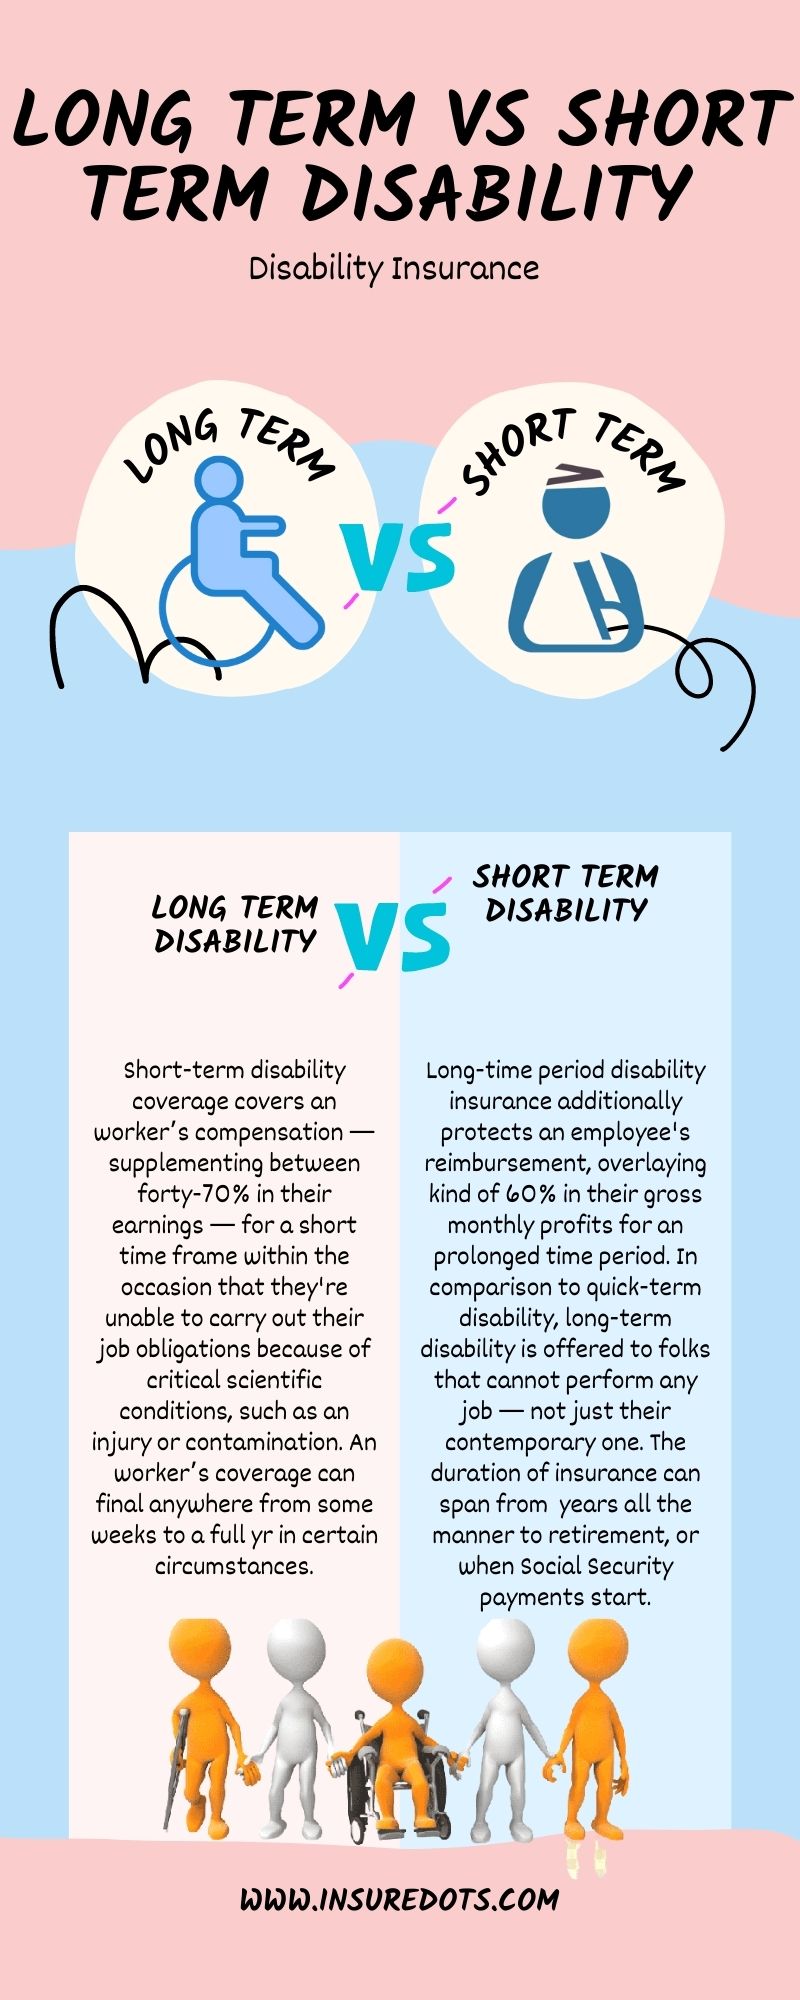 Long Term vs Short Term Disability
Infographic 